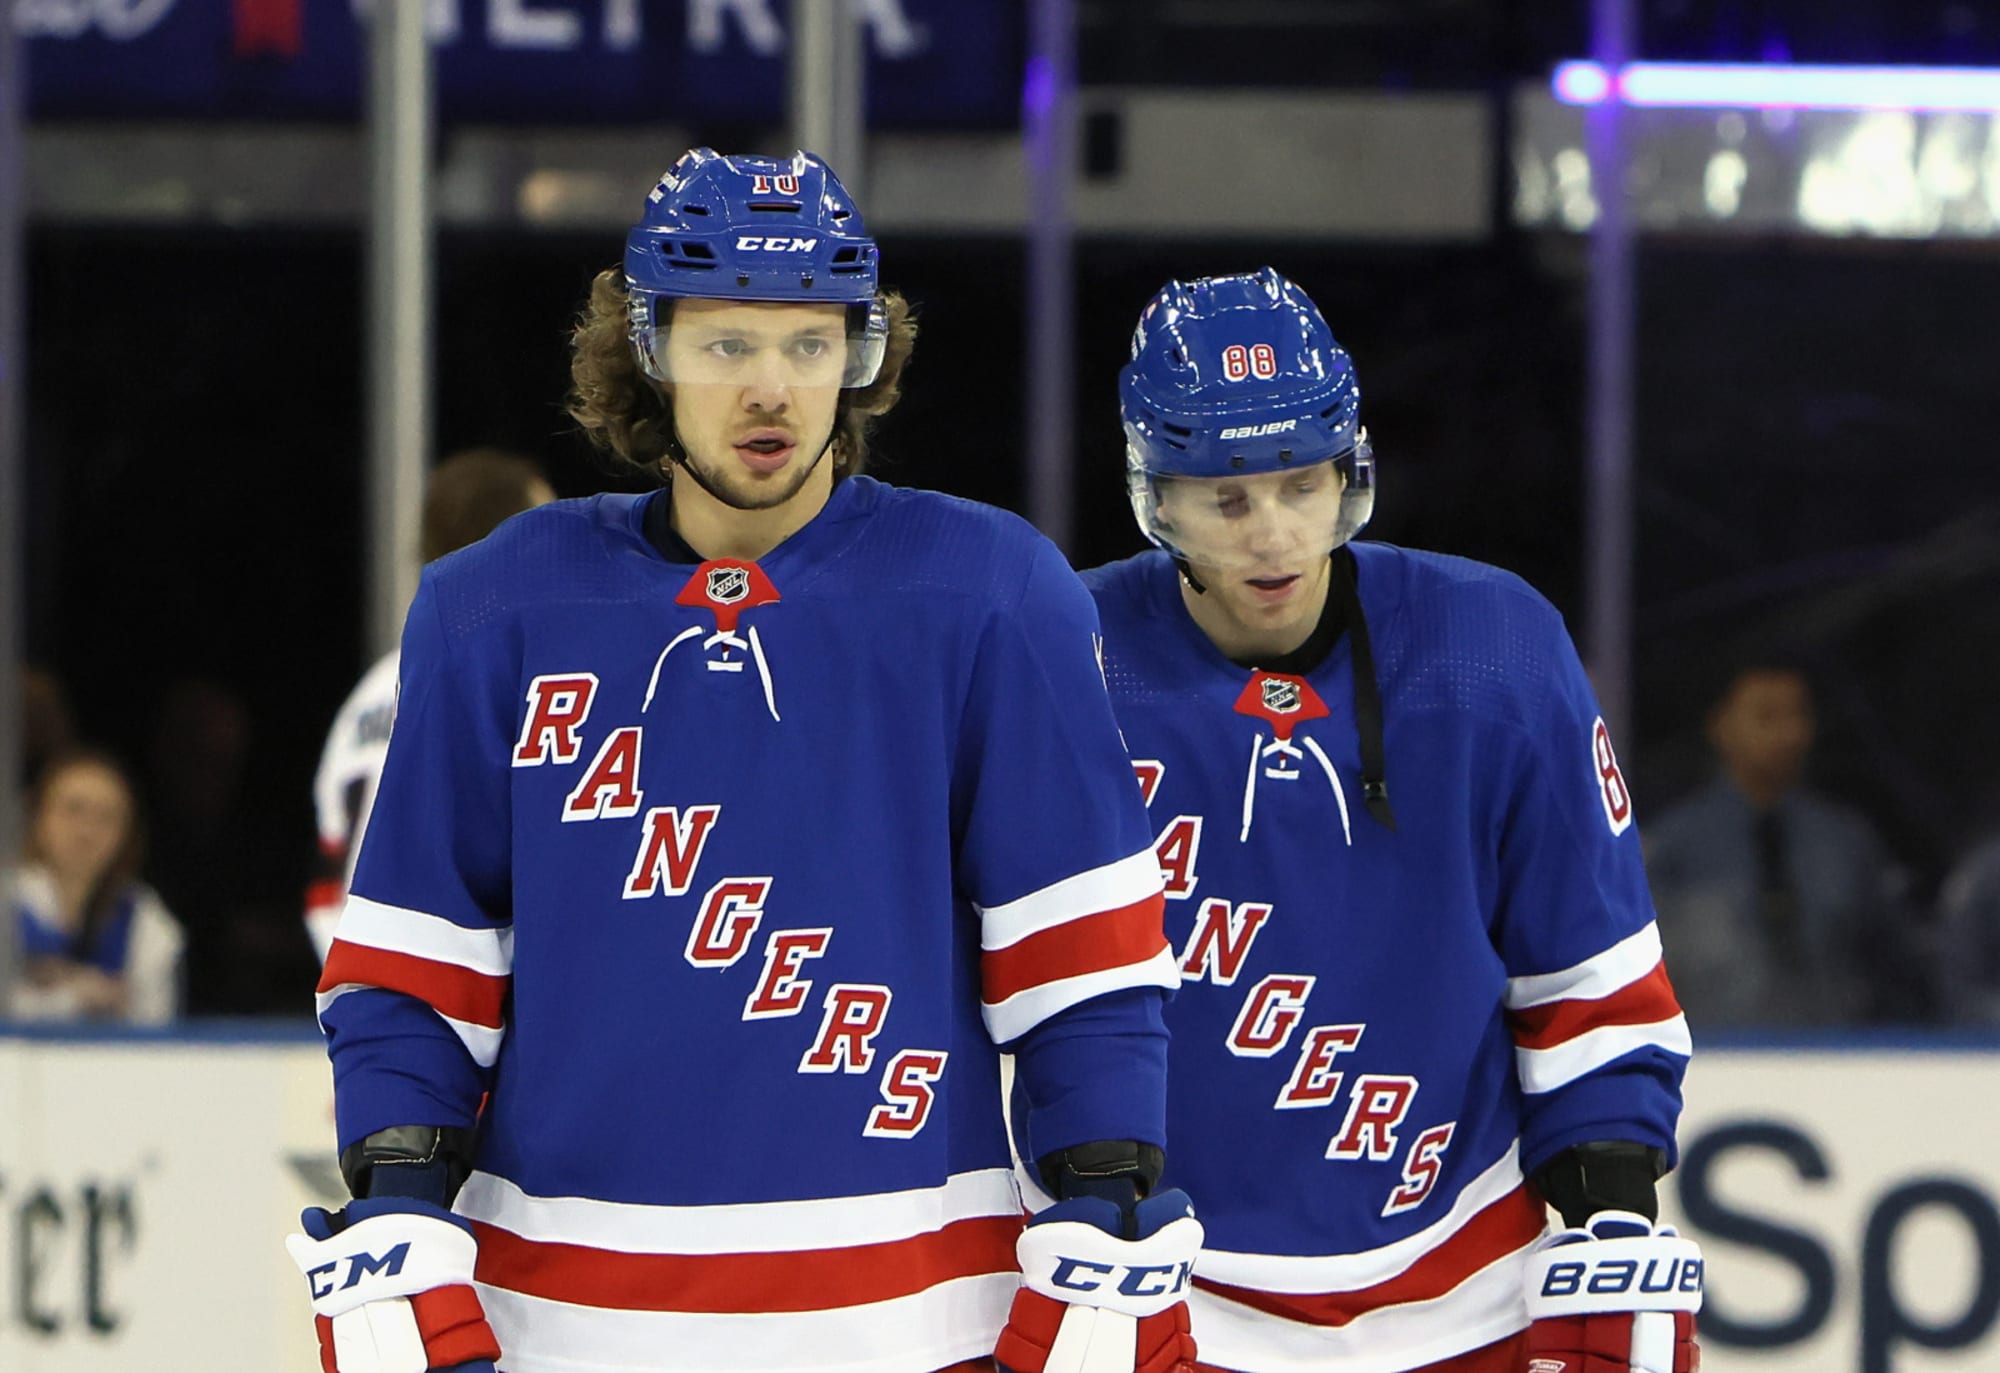 Rangers' Kreider replacing injured teammate Panarin in NHL all